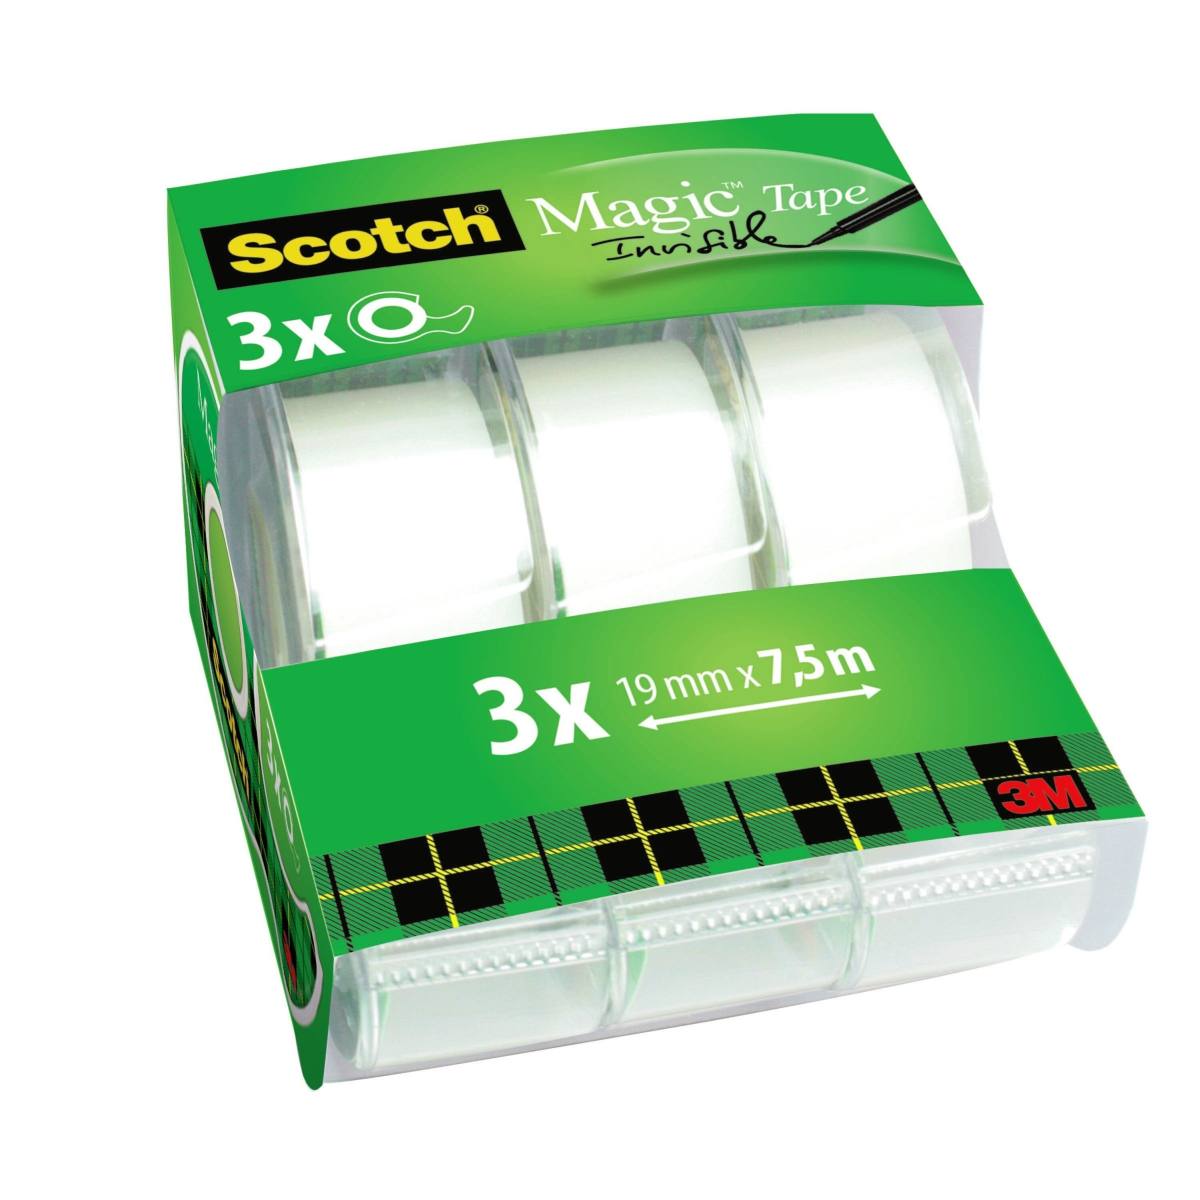 3M Scotch Magic Adhesive Tape Caddy Pack, 3 rollos en dispensadores manuales 19 mm x 7,5 m